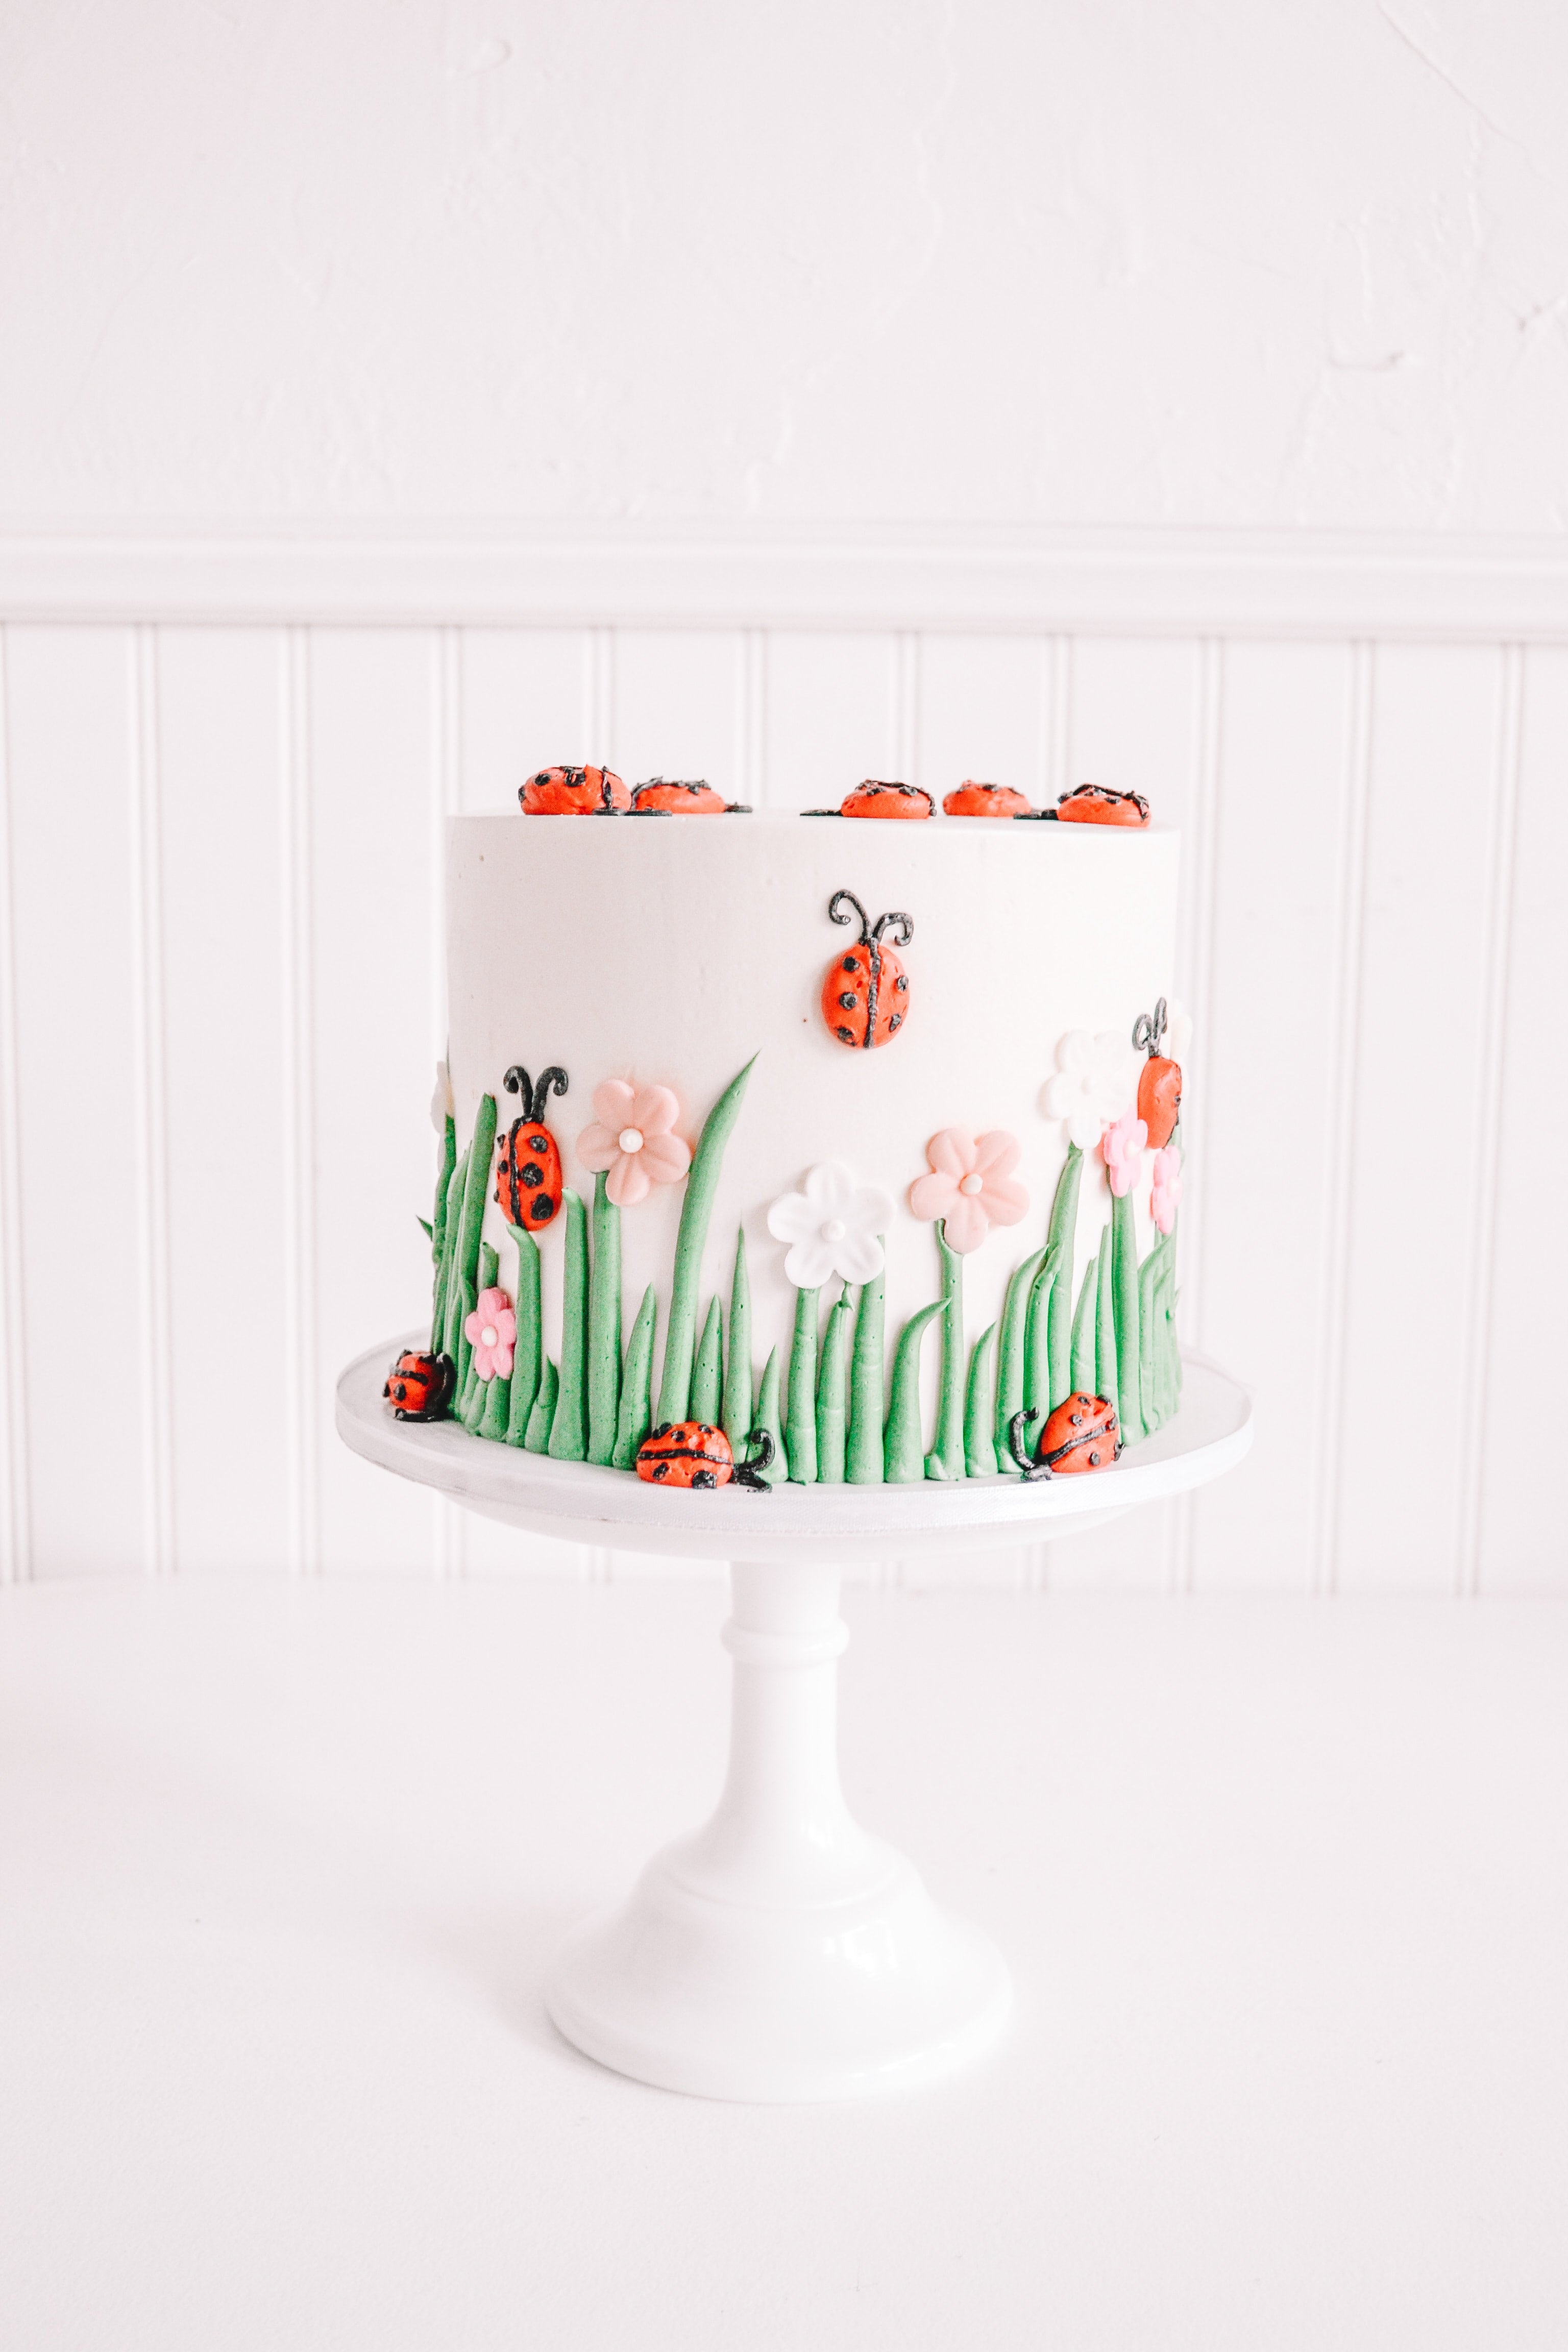 1,195 Cake Ladybug Images, Stock Photos & Vectors | Shutterstock